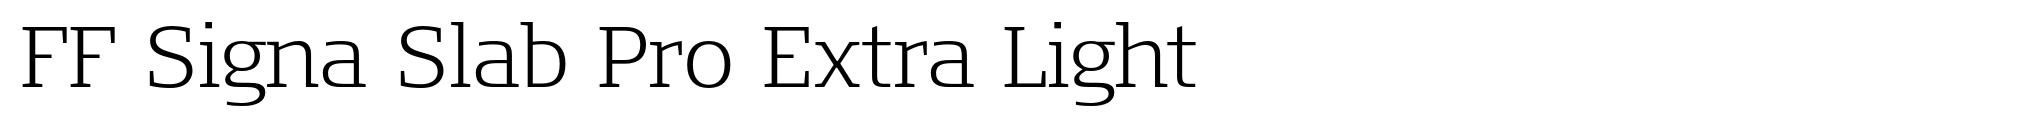 FF Signa Slab Pro Extra Light image